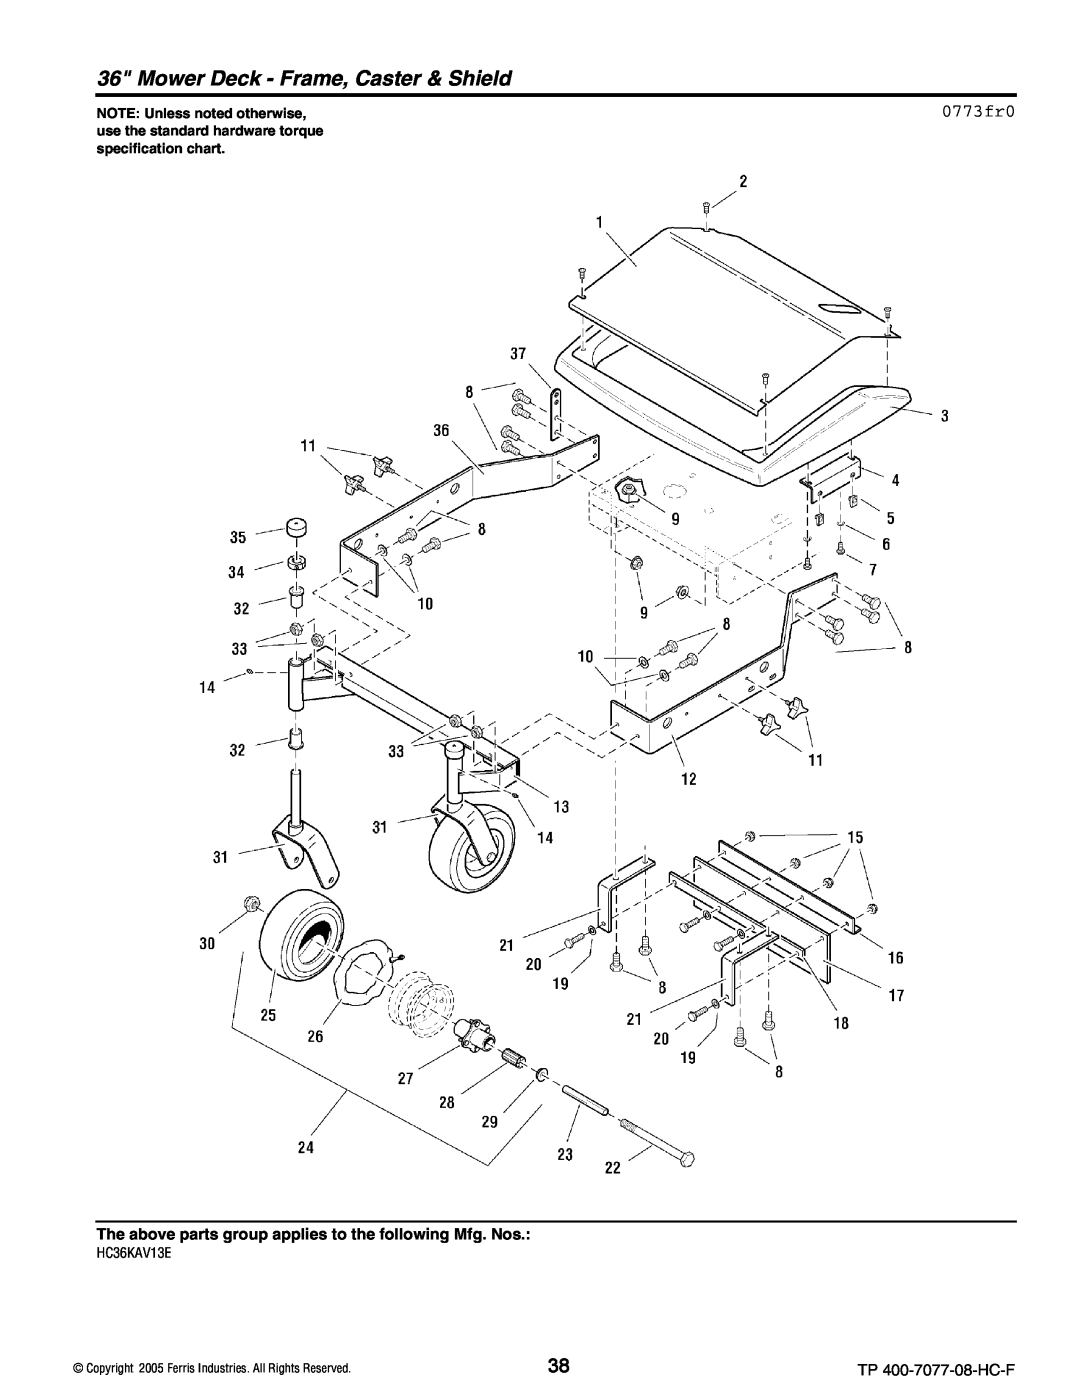 Ferris Industries HC32KAV13, HC36KAV13E manual Mower Deck - Frame, Caster & Shield, 0773fr0, NOTE Unless noted otherwise 